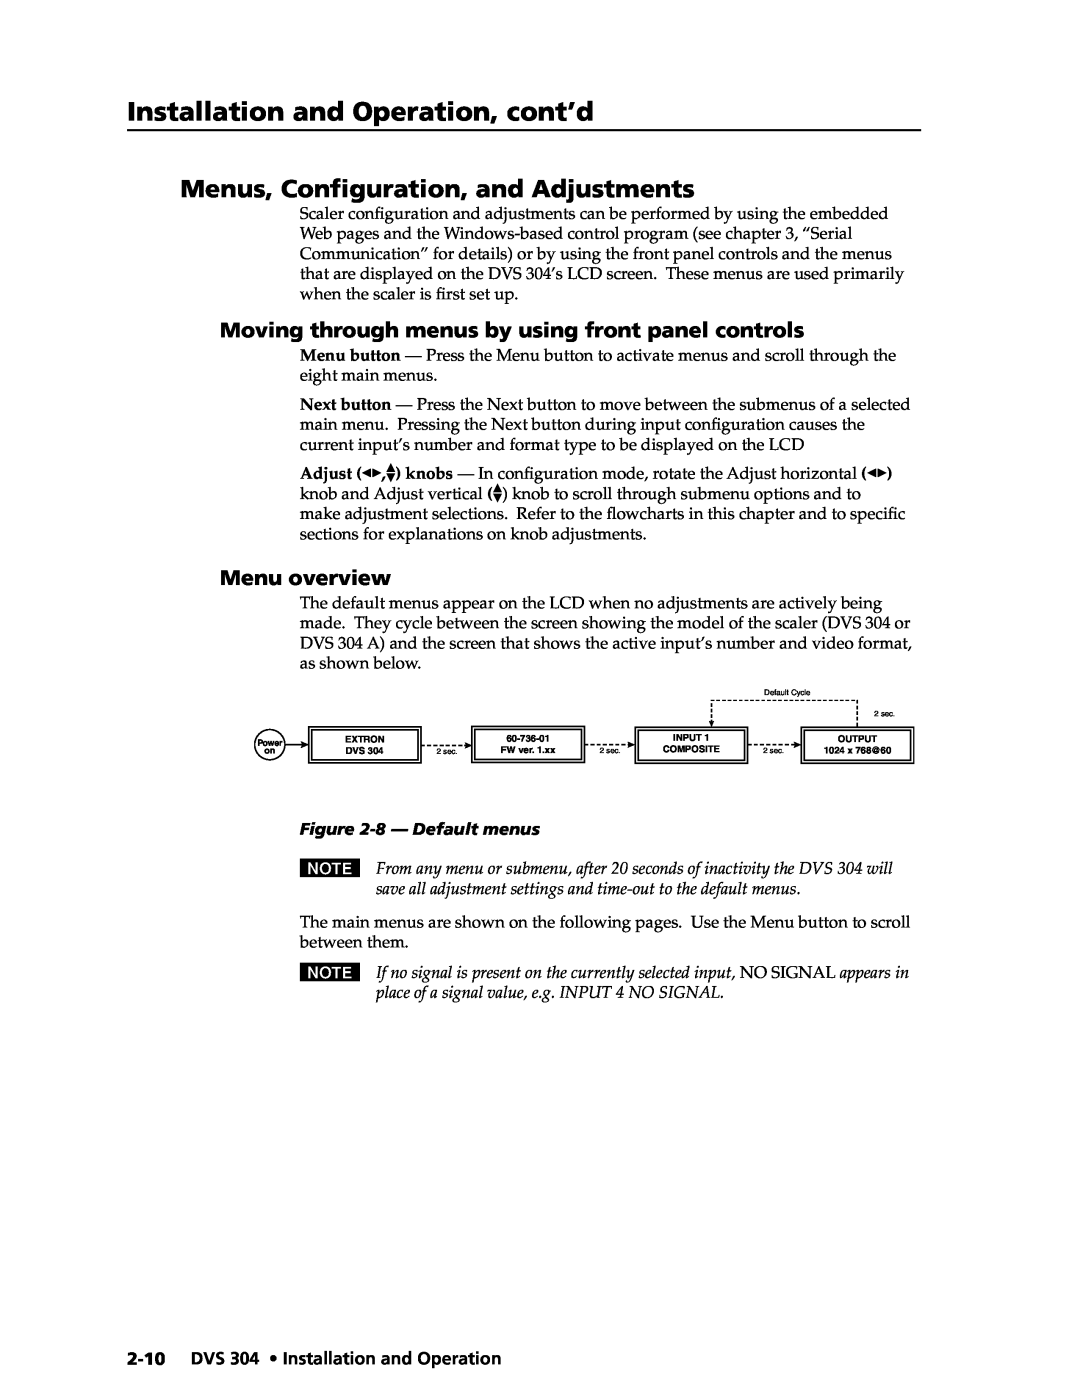 Extron electronic DVS 304 AD, DVS 304 D manual Menus, Configuration, and Adjustments, Menu overview, 8- Default menus 